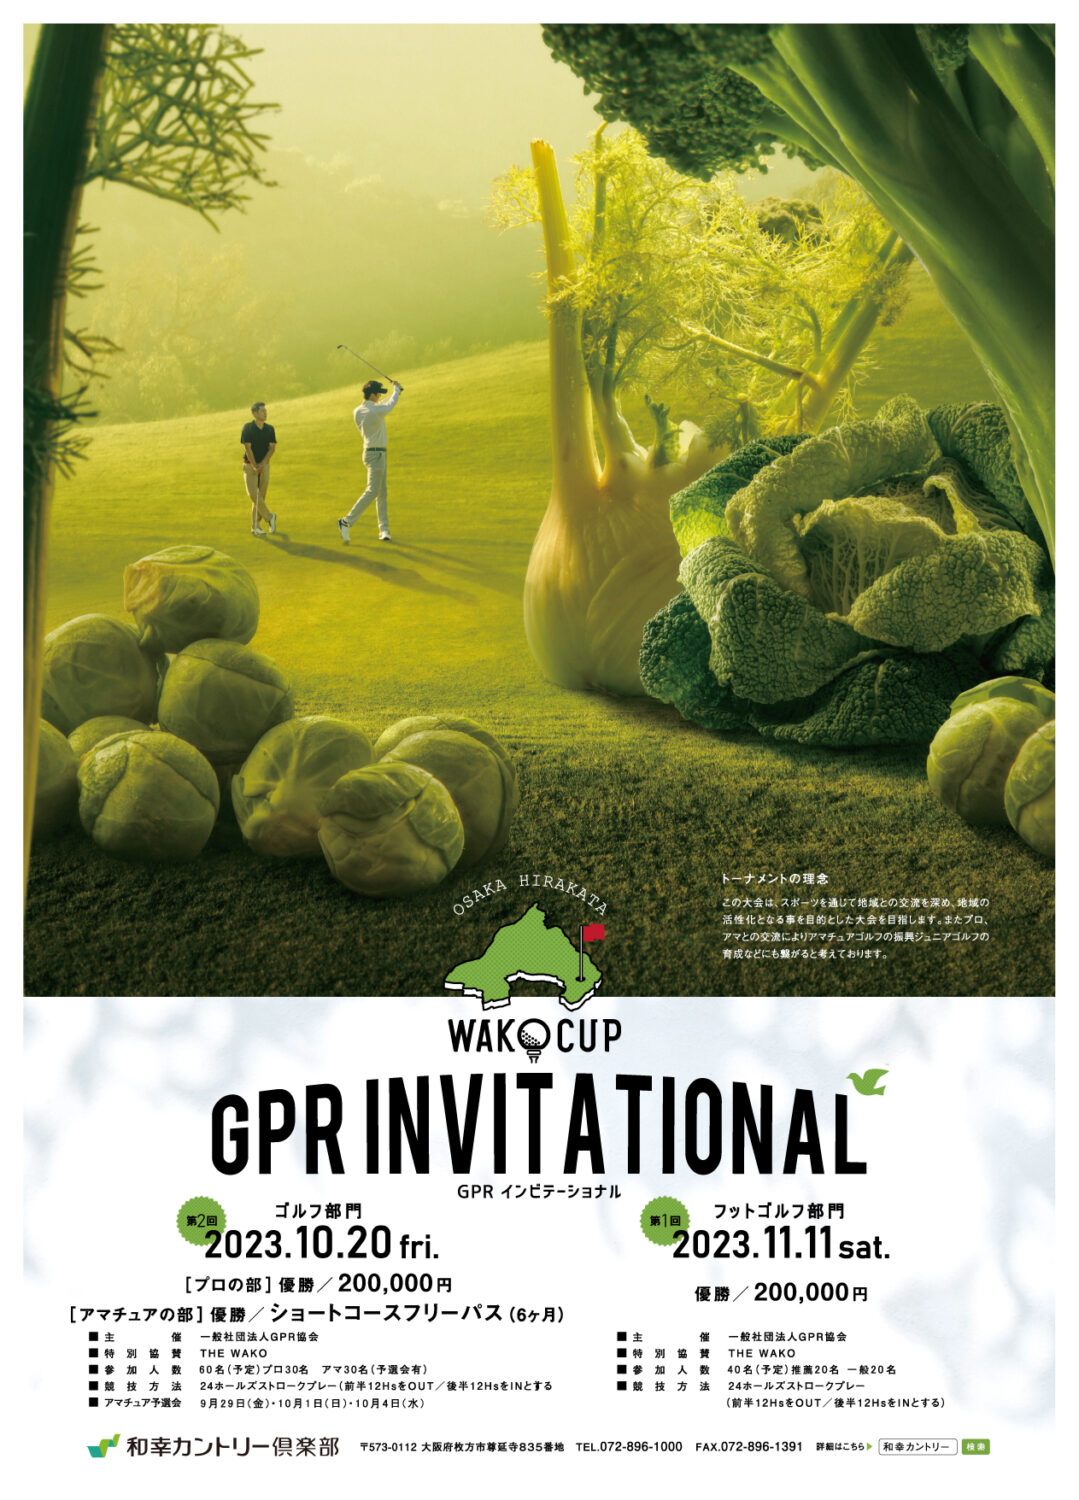 GPRインビテーショナルは『フットゴルフの部』も行われます！！